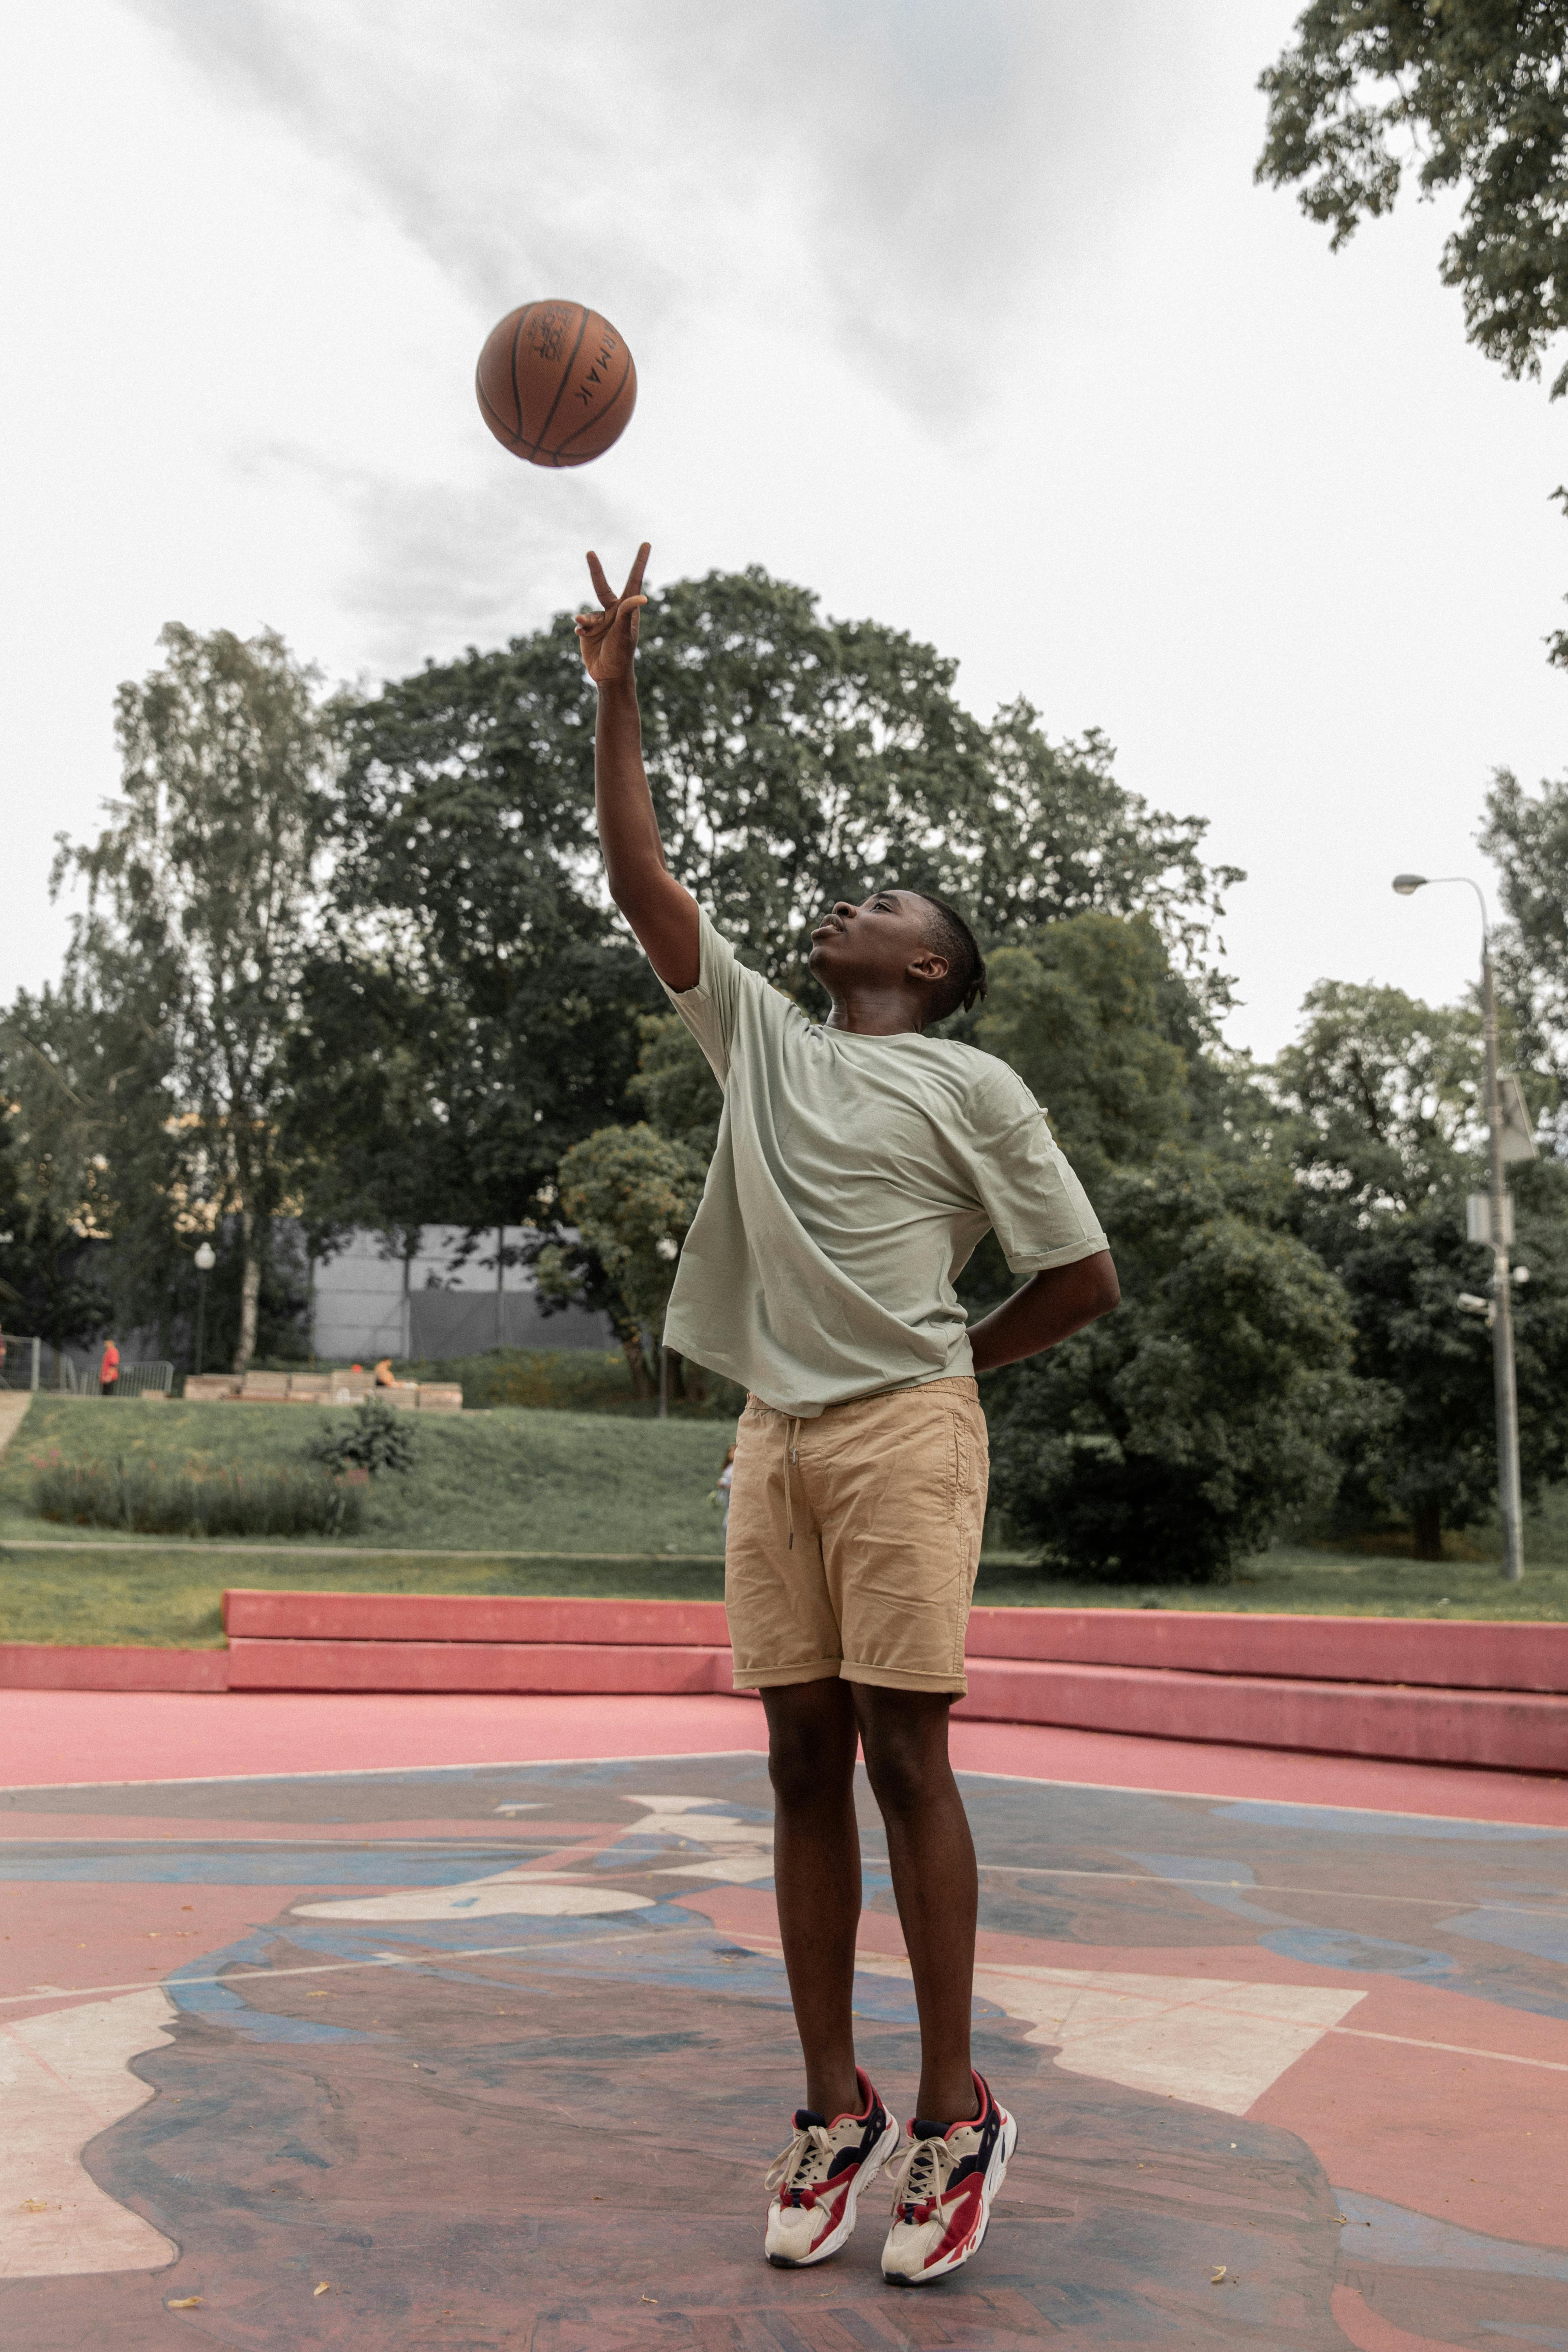 black man playing basketball on court